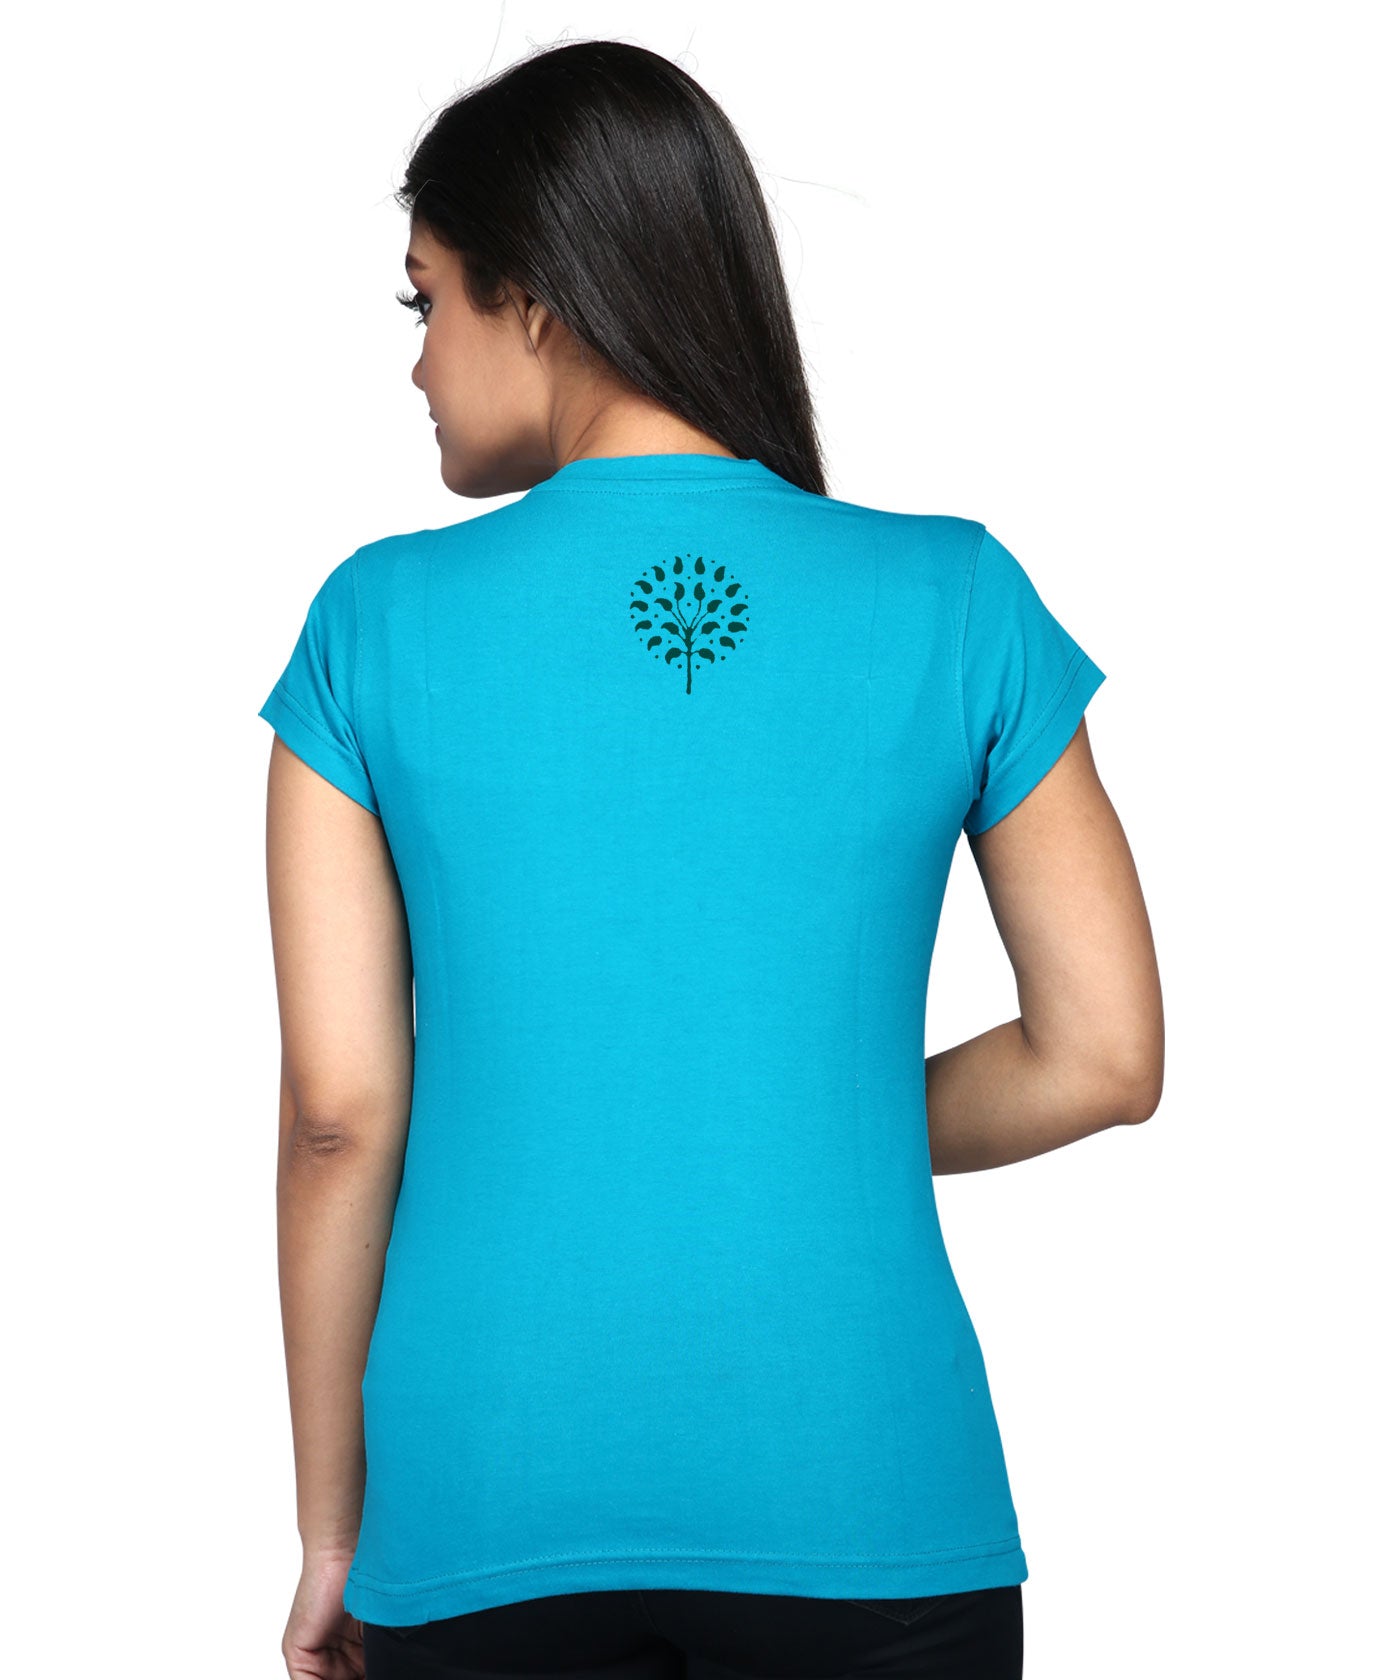 Semi Circle - Block Print Tees for Women - Turquoise